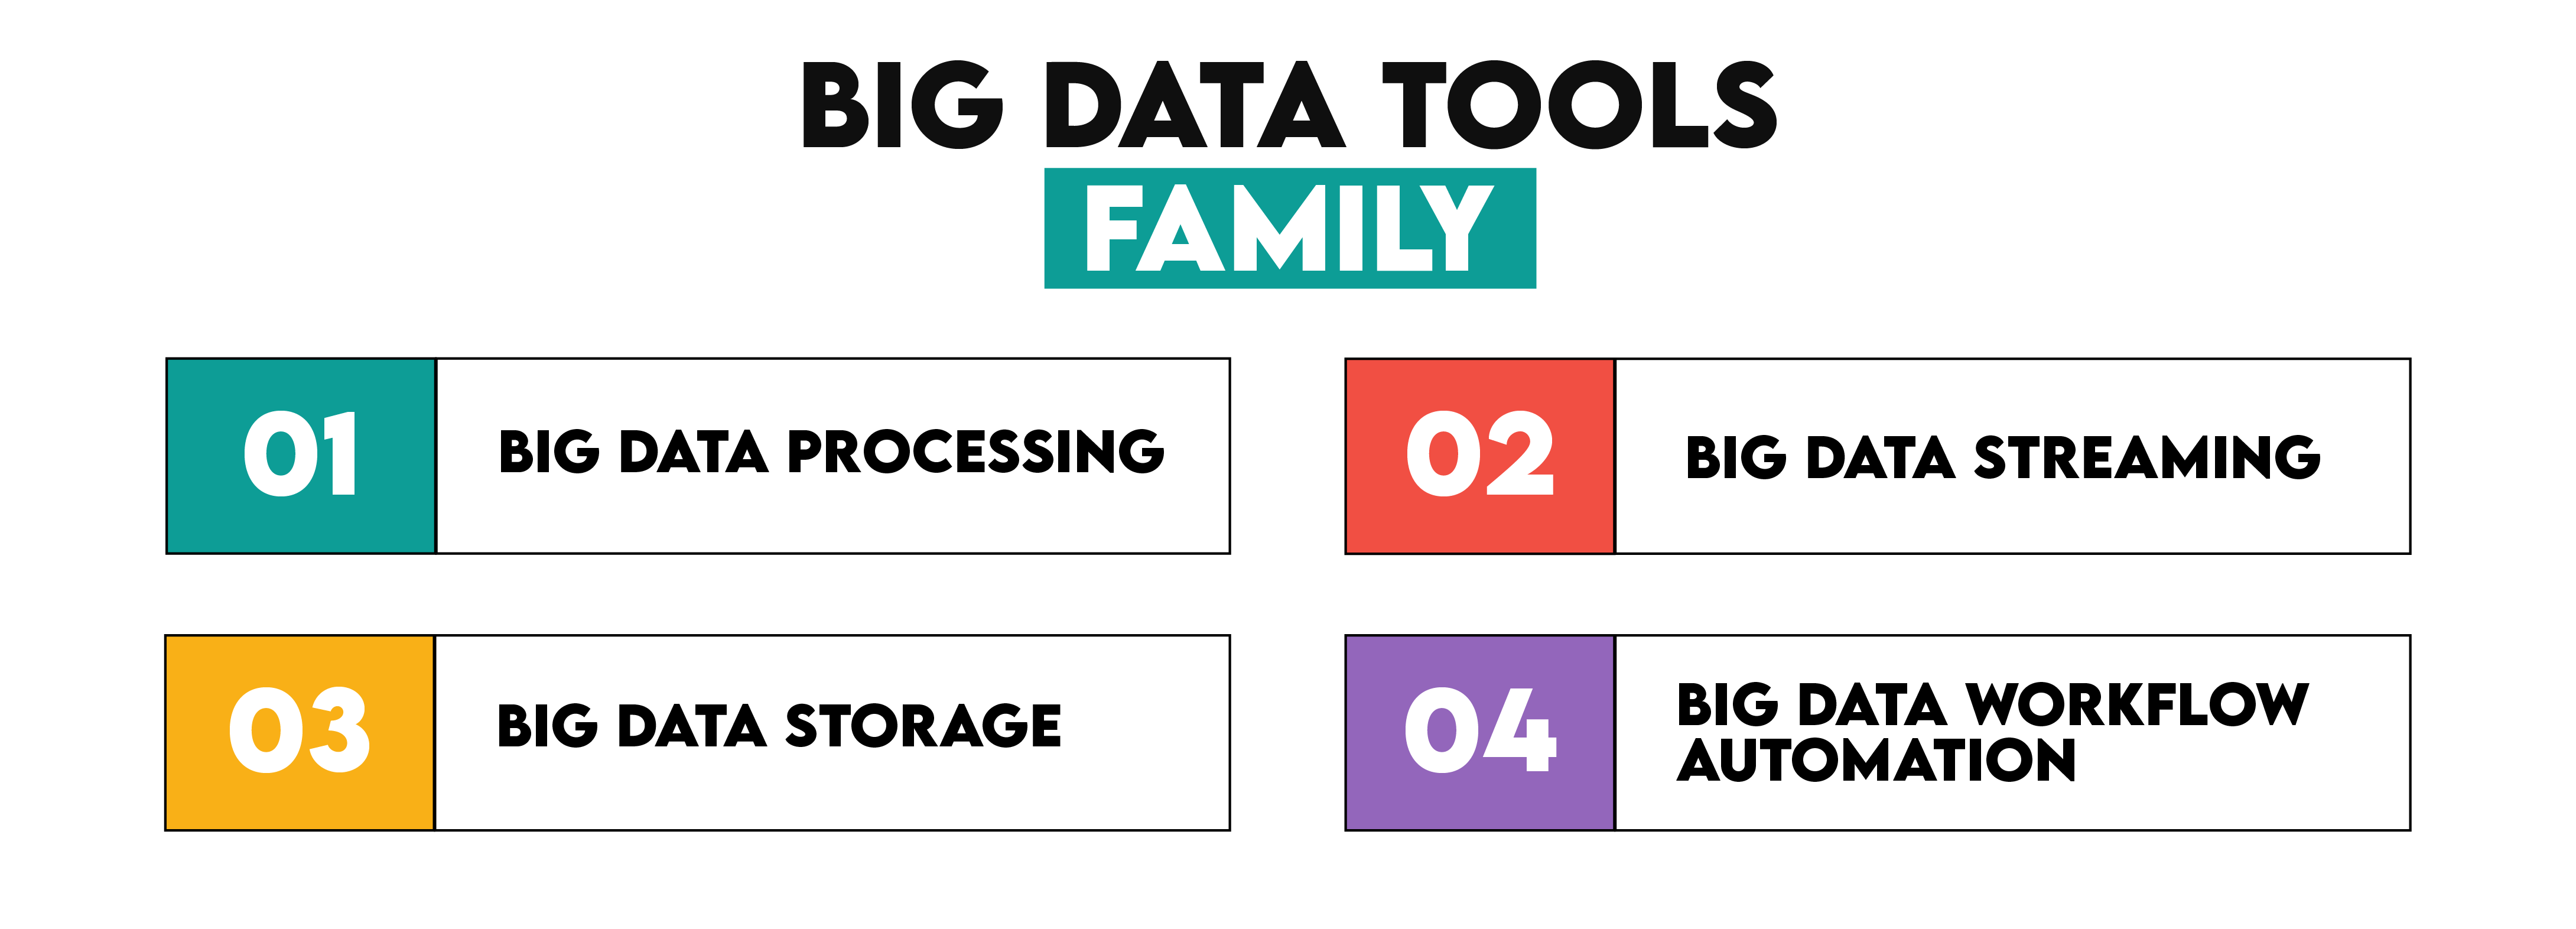 Big Data Tools Family